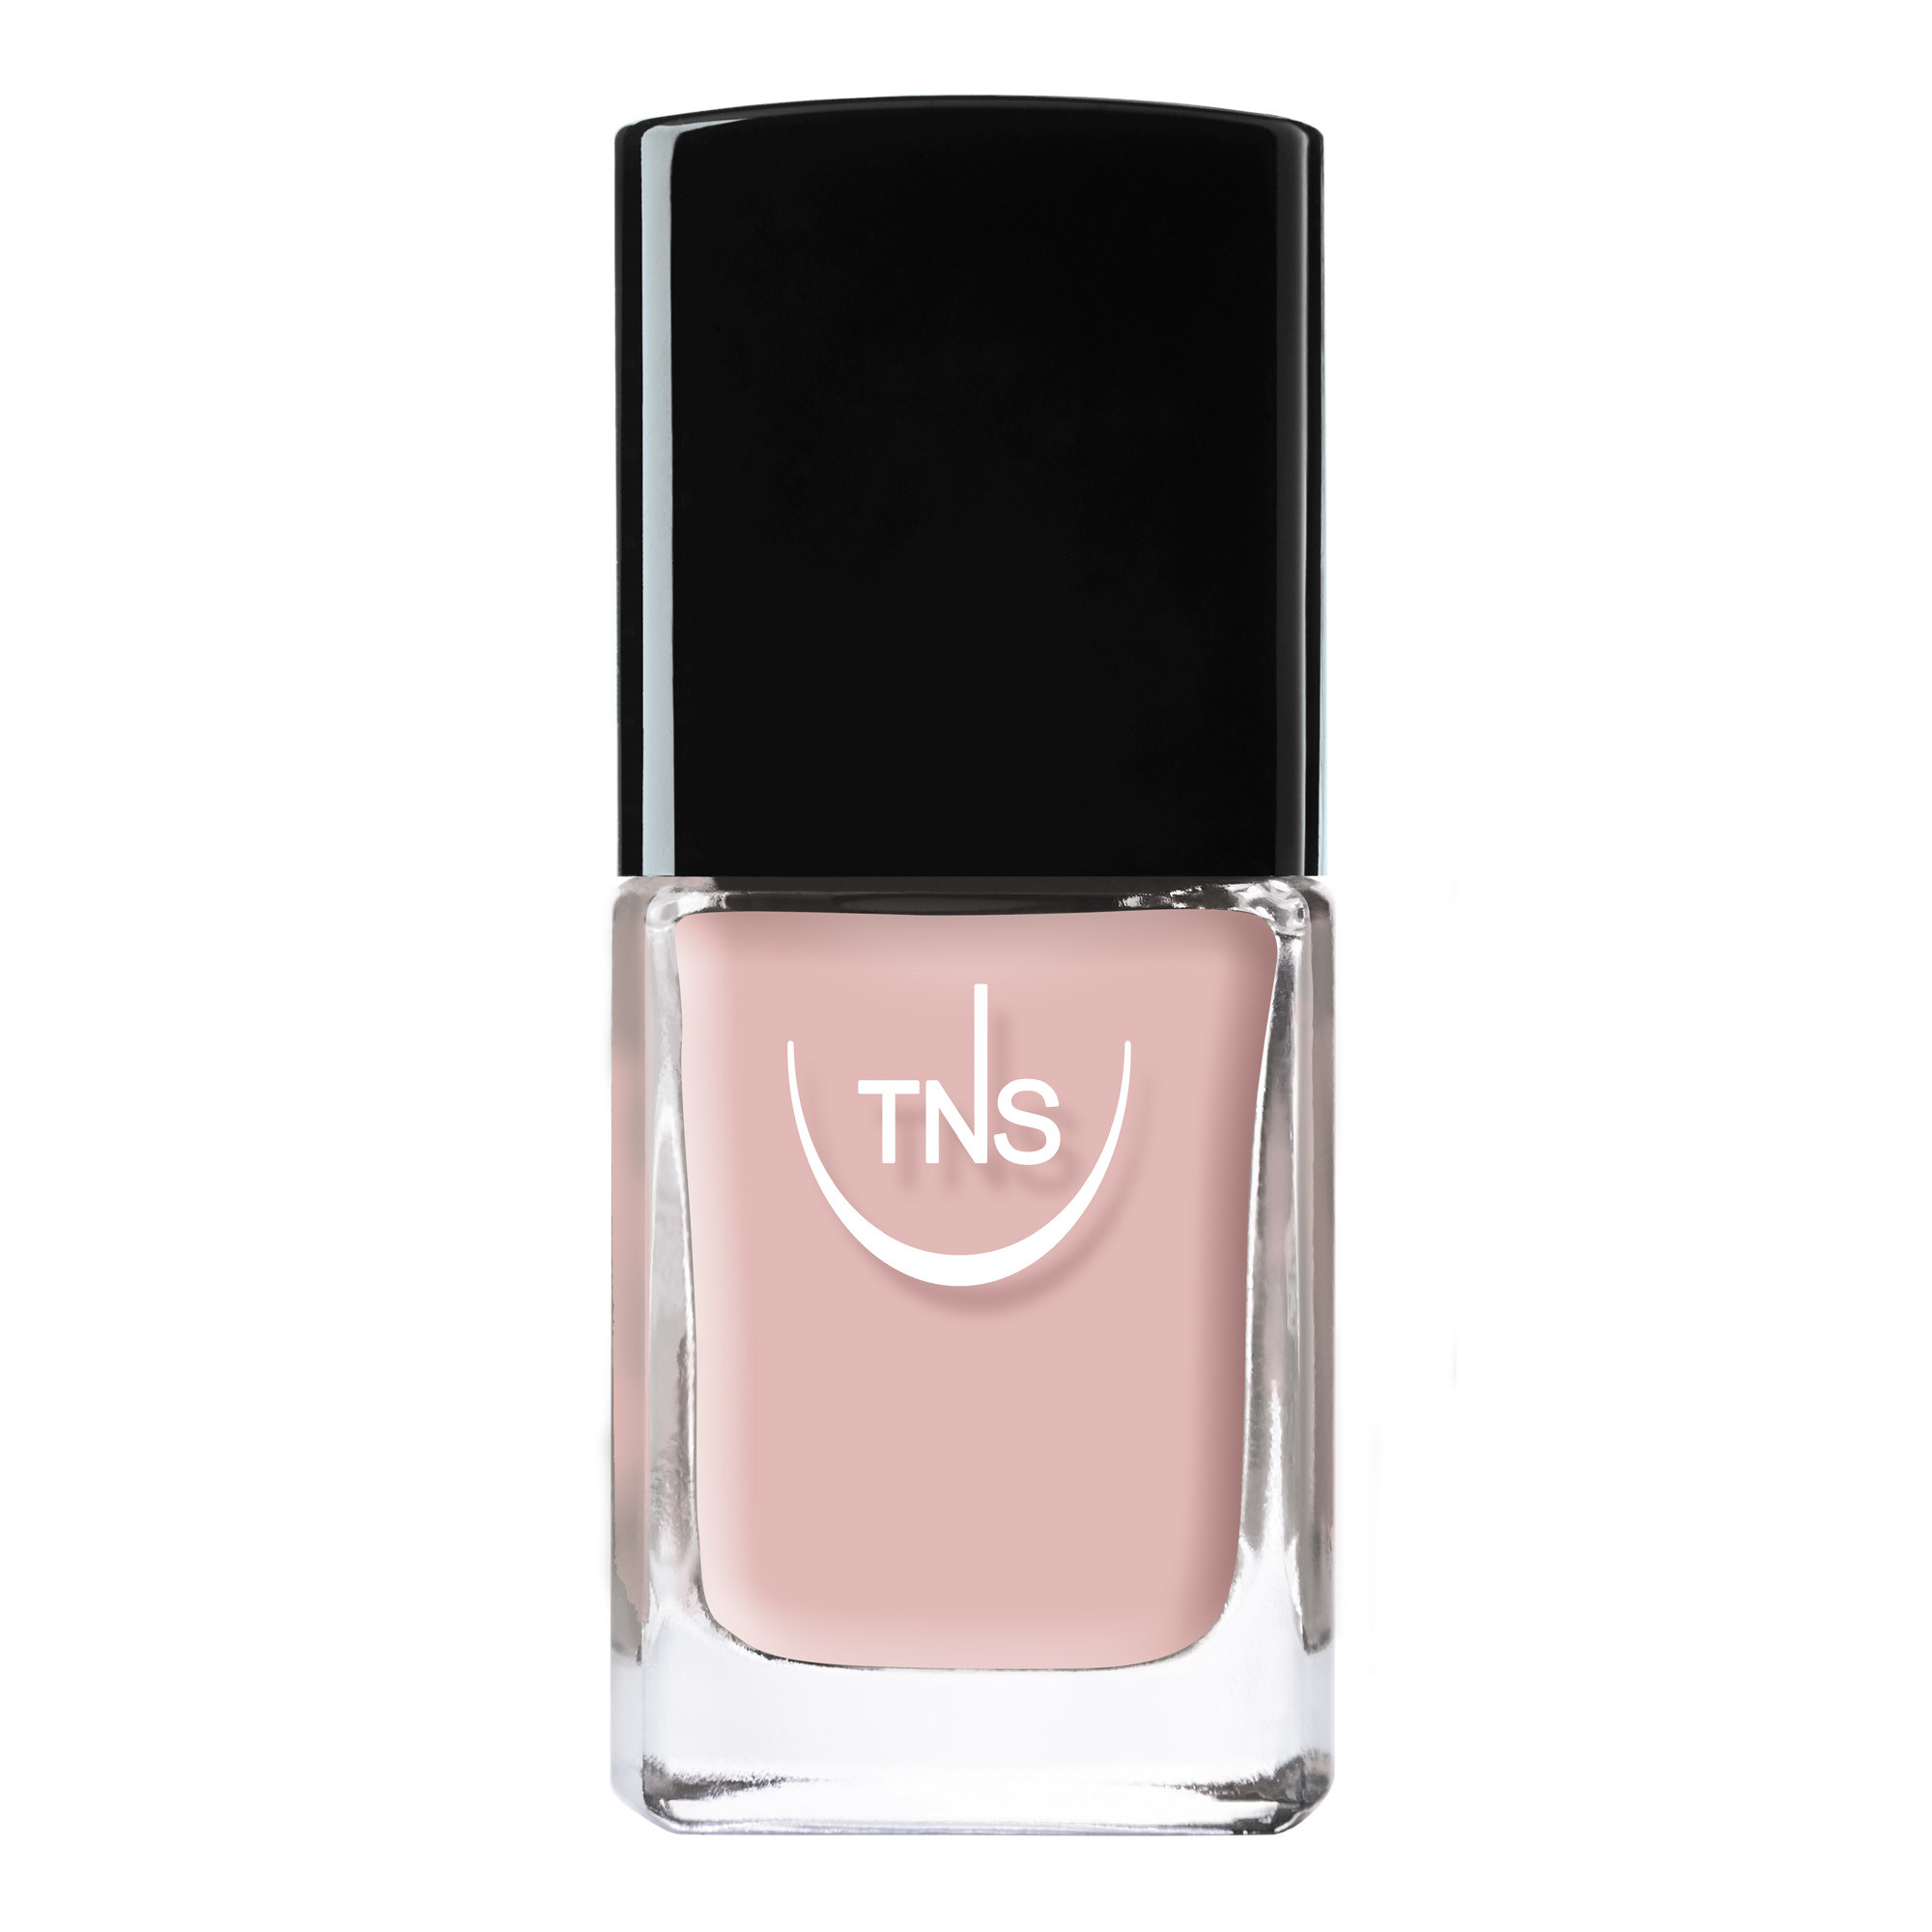 TNS Nagellack Light Touch hell nude-rosa 10 ml